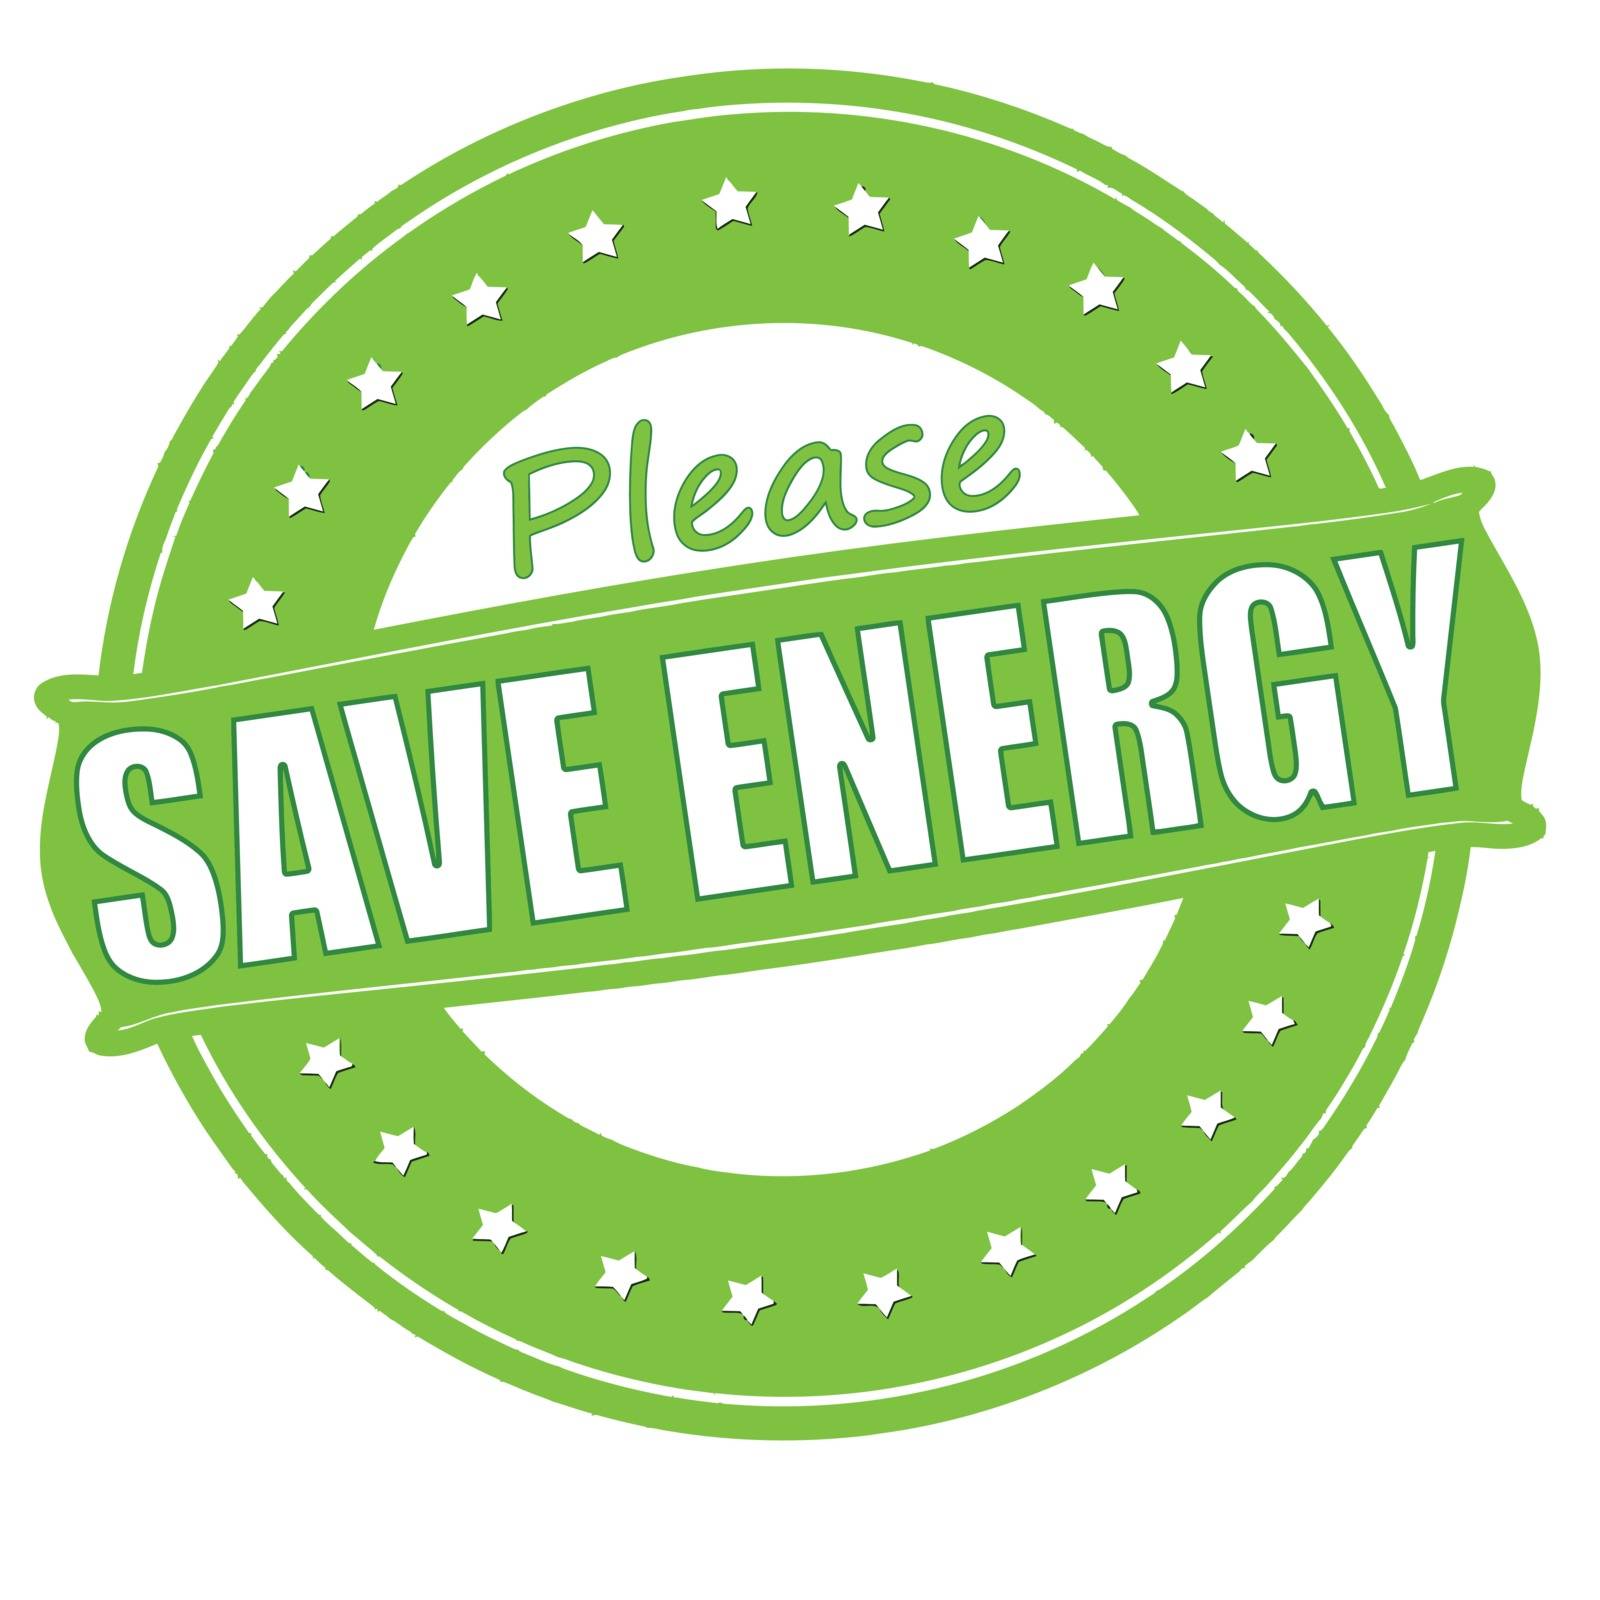 Save energy by carmenbobo